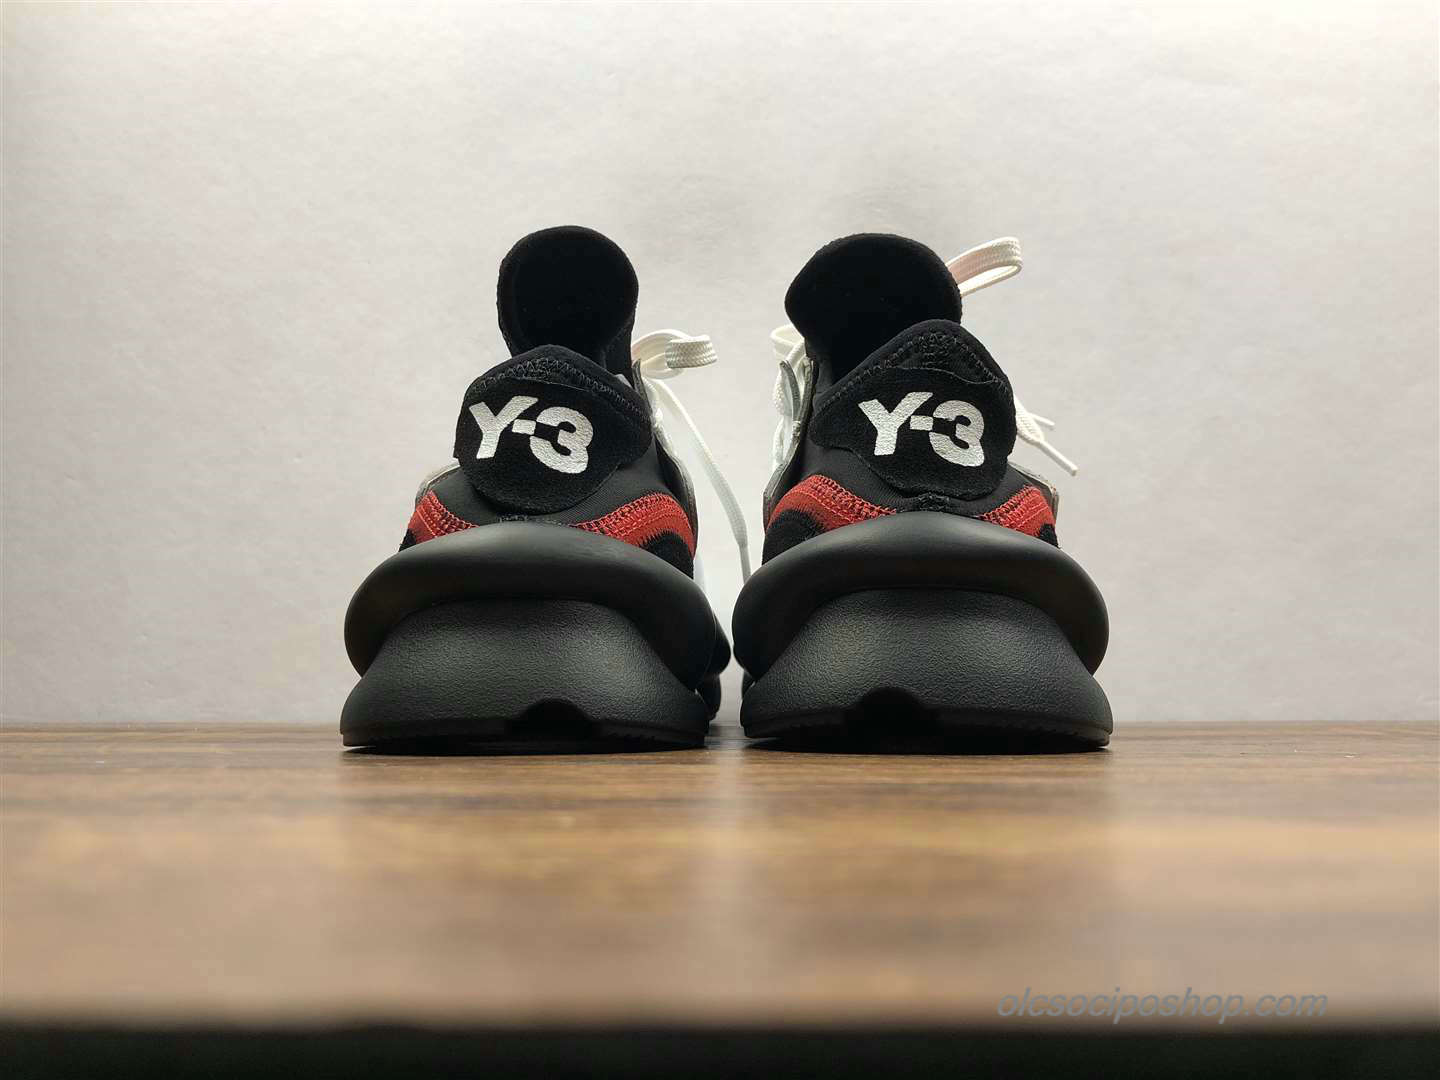 Yohji Yamamoto x Adidas Y-3 Kaiwa Chunky Fehér/Fekete/Piros Cipők (A8996)